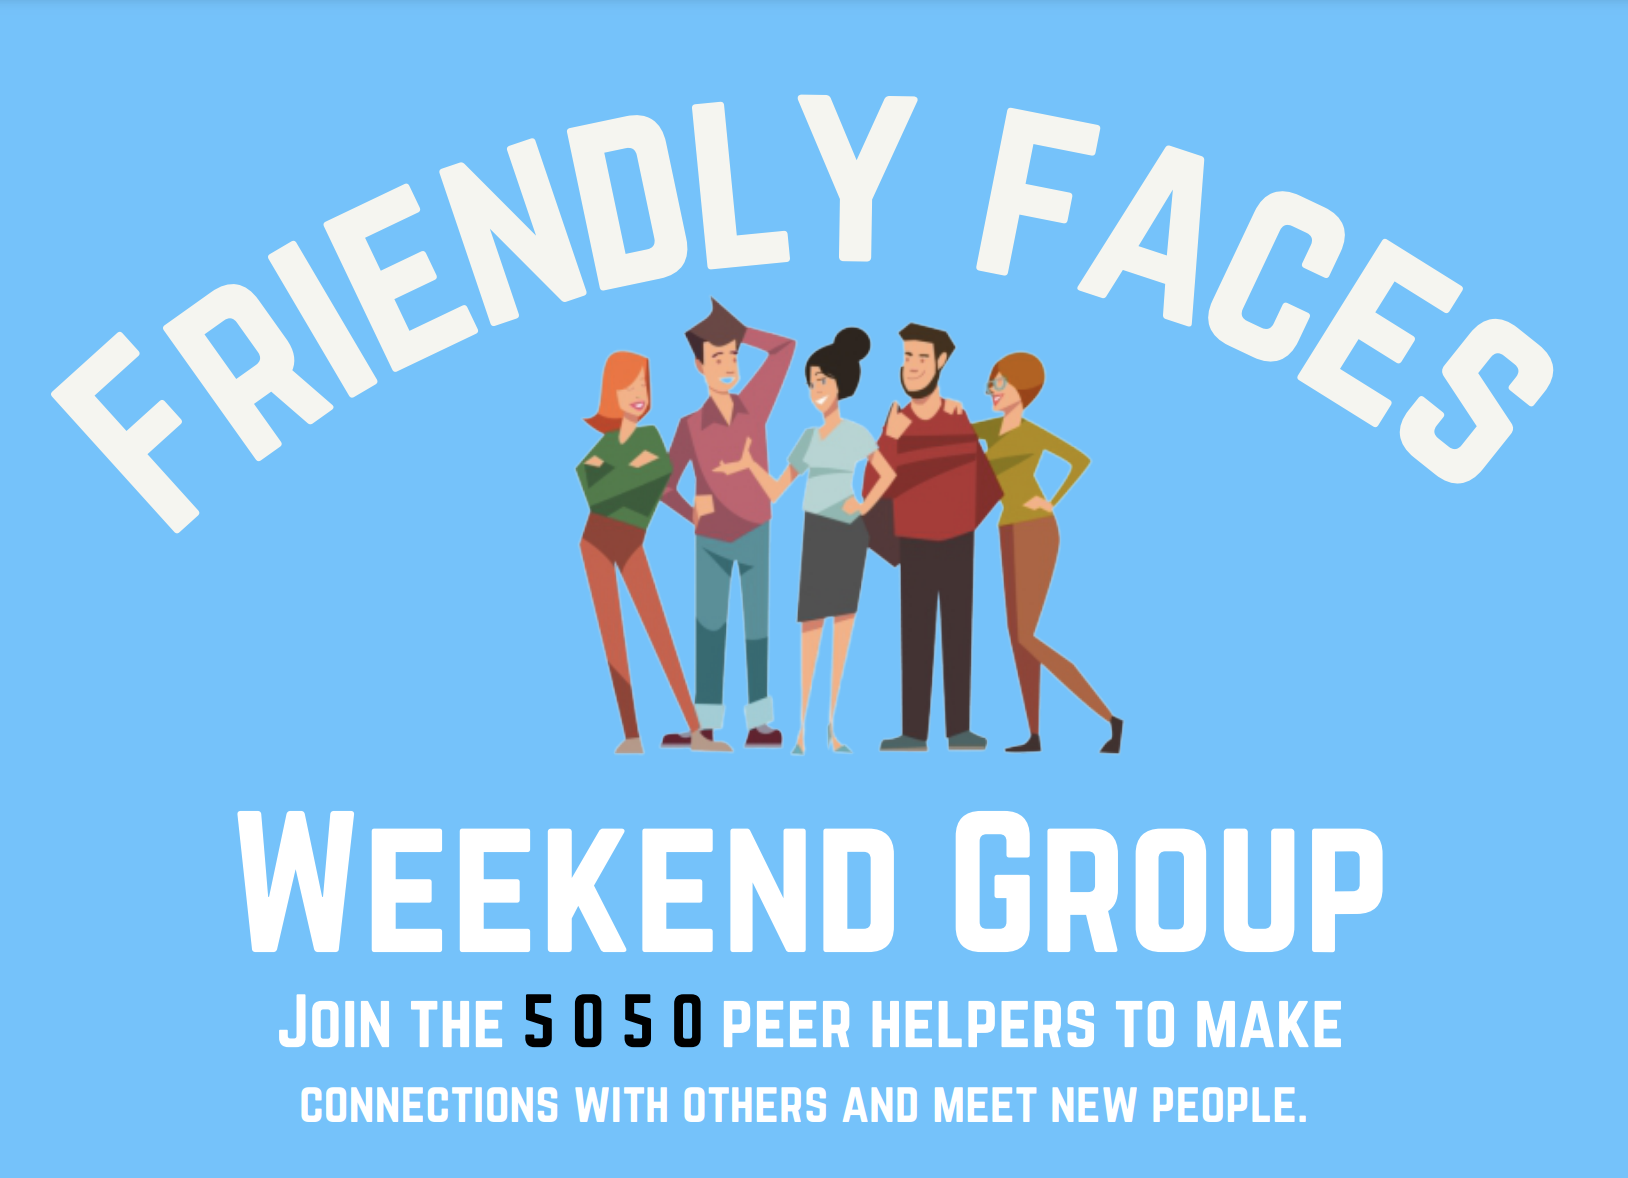 Friendly Faces weekend group flyer screenshot